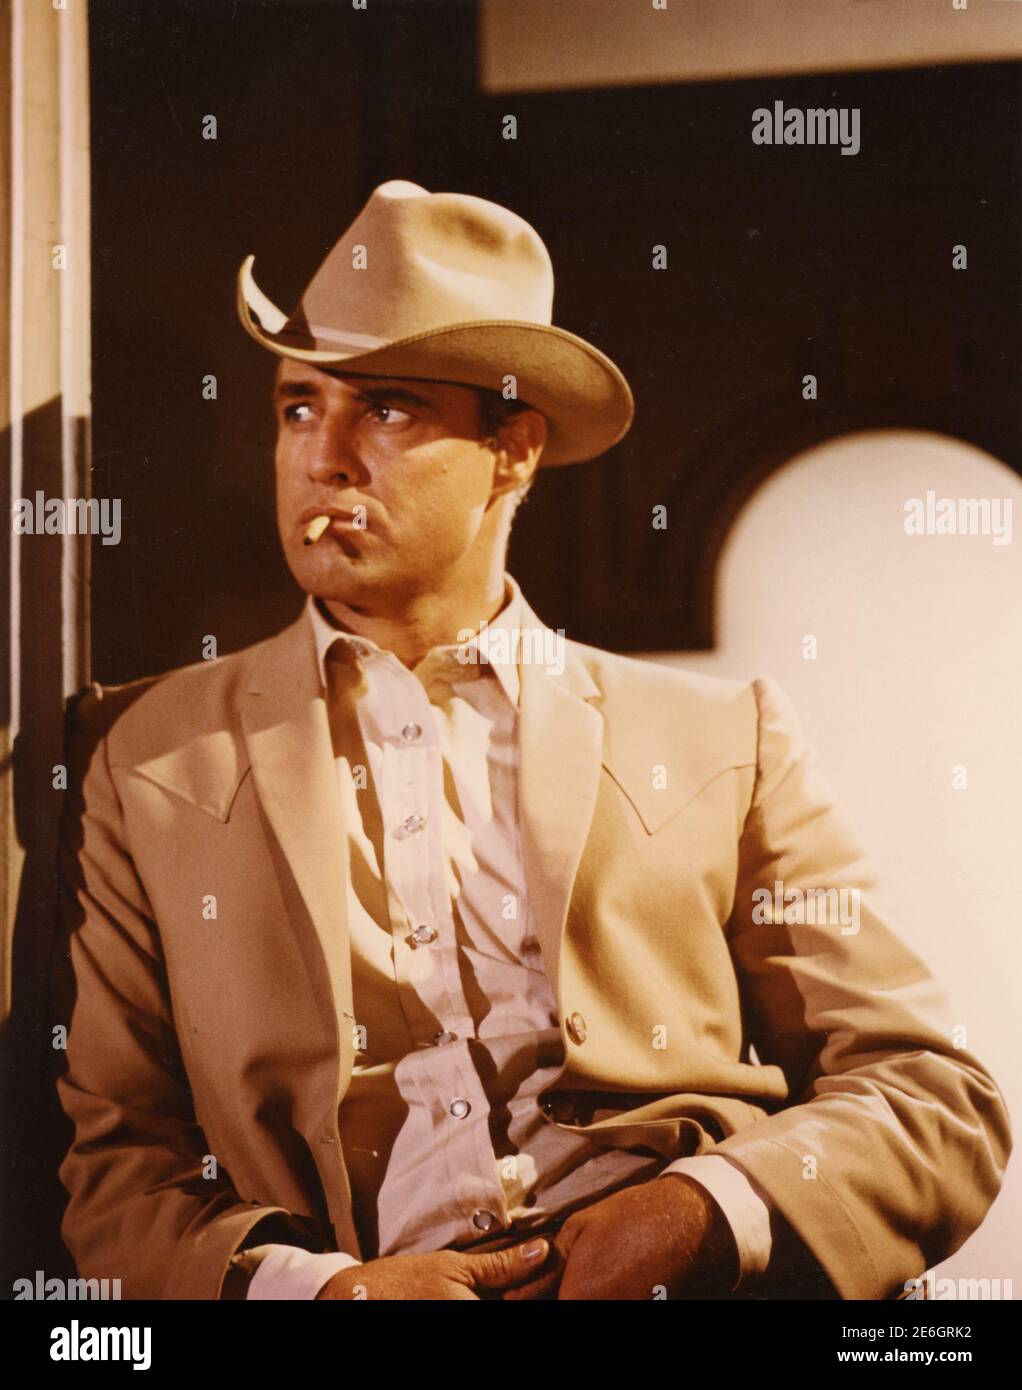 American actor and film director Marlon Brando, USA 1980s Stock Photo